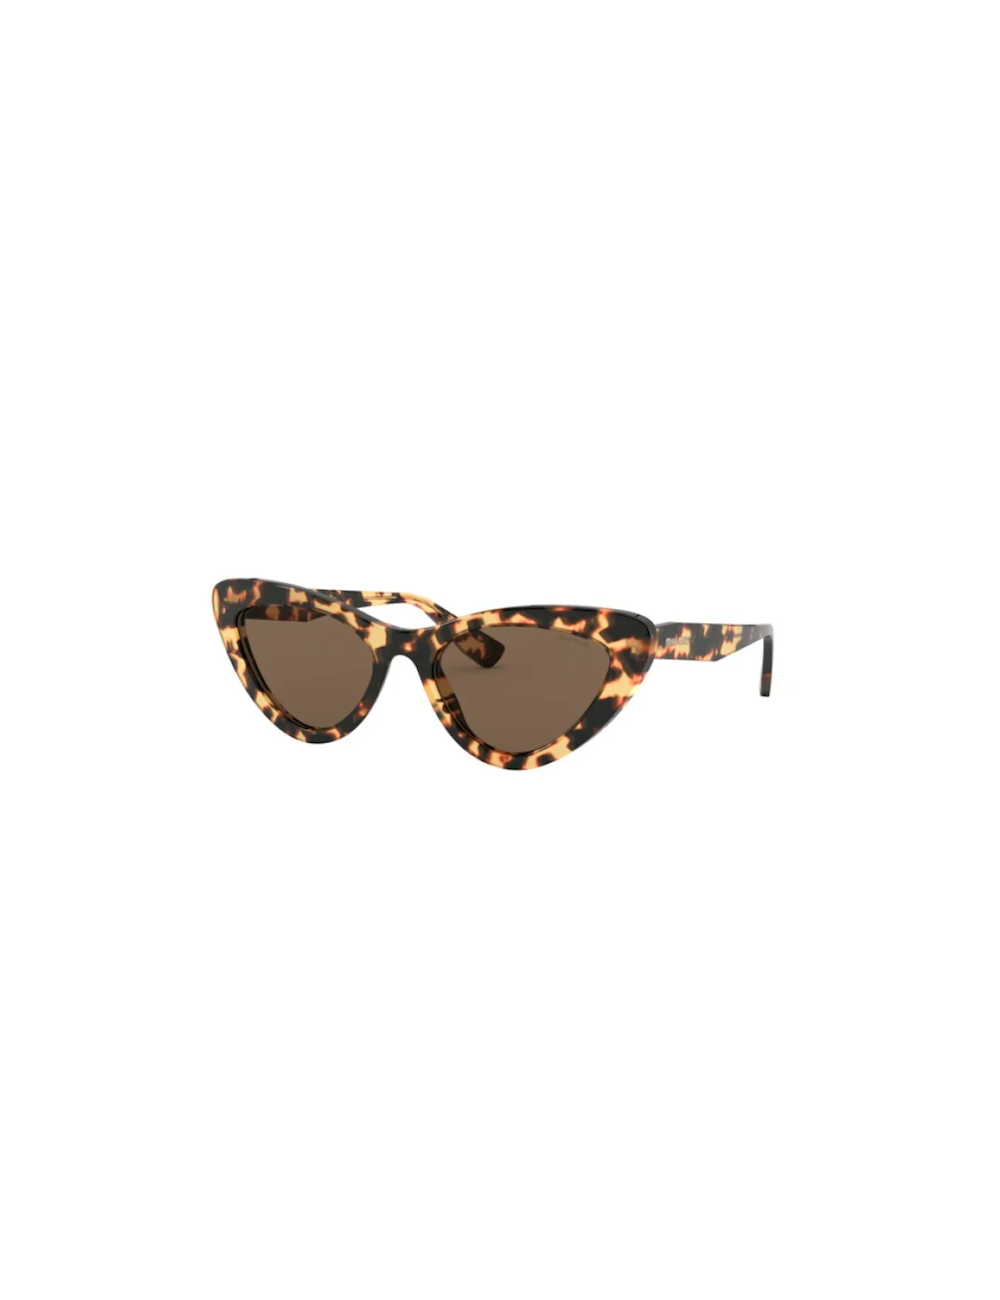 Transparent Sunglasses Cheetah Print